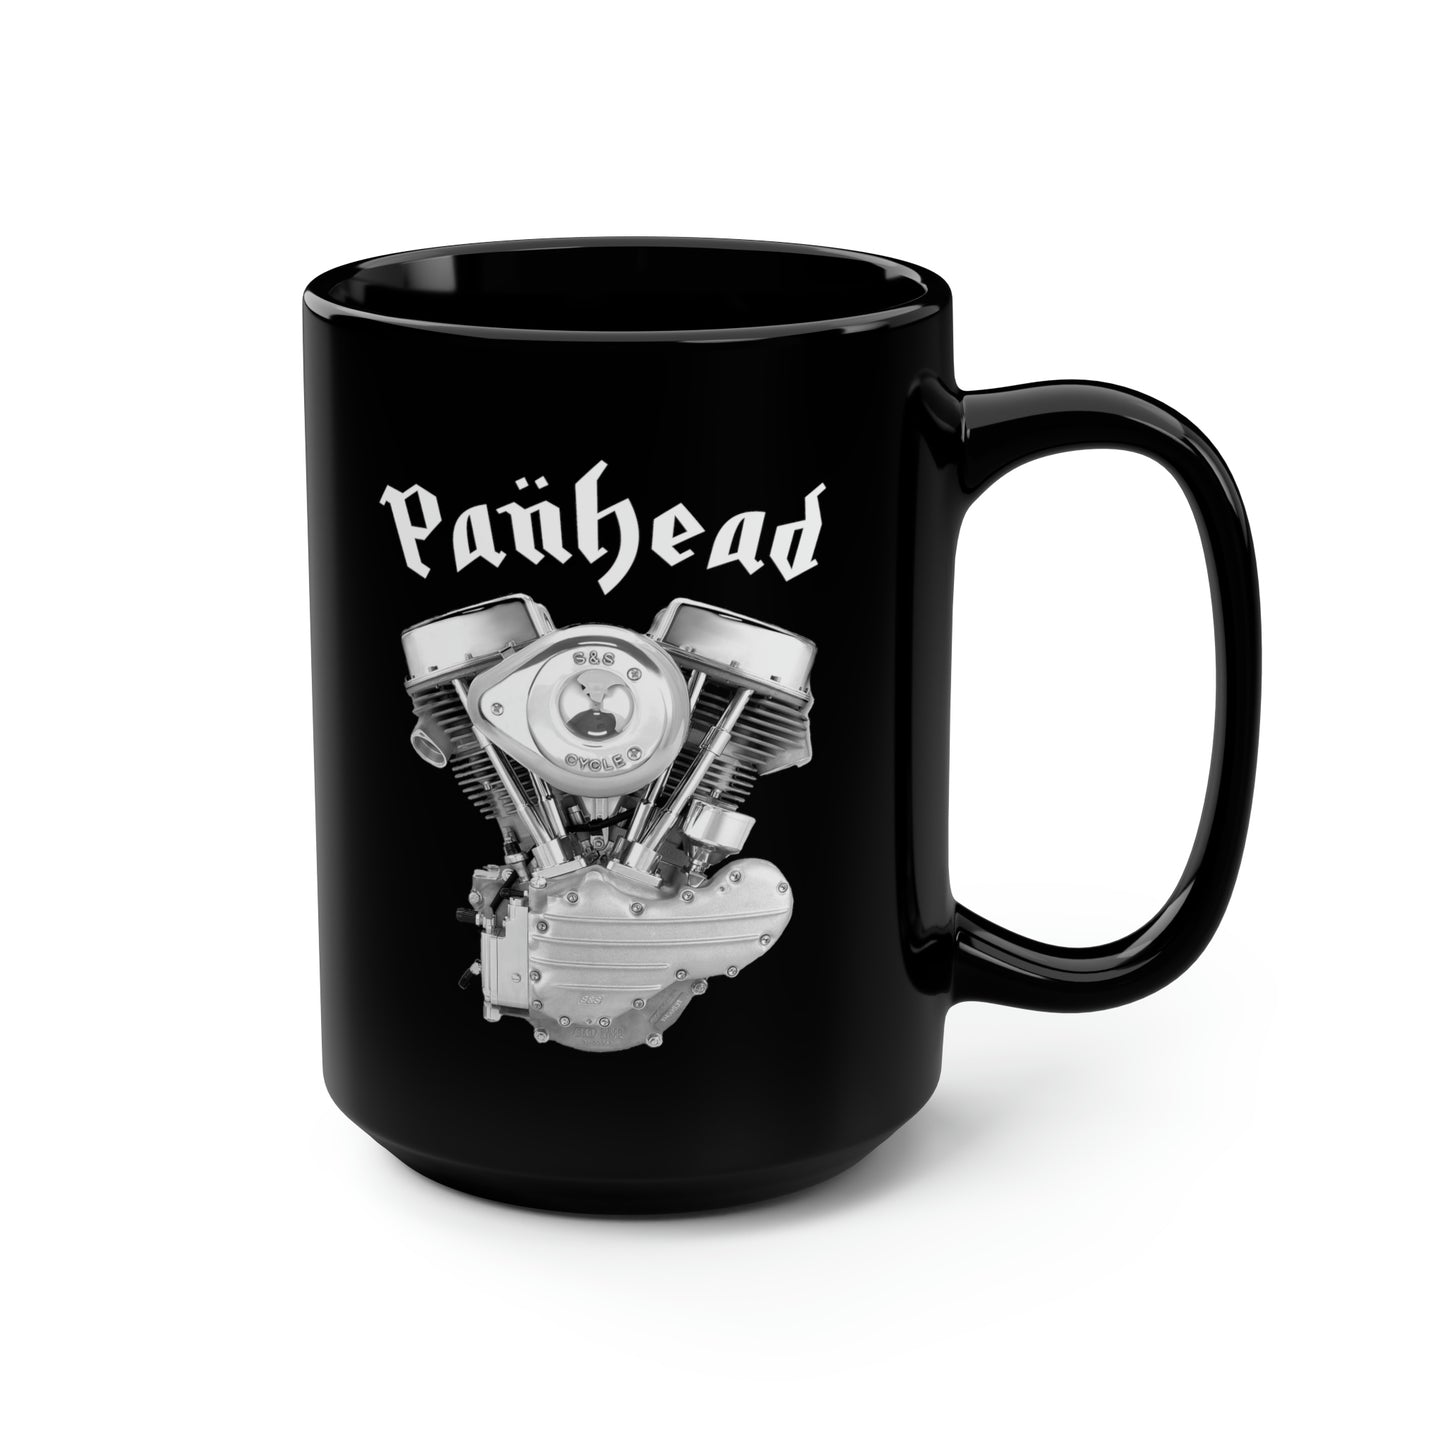 PANHEAD 1 Black Mug, 15oz